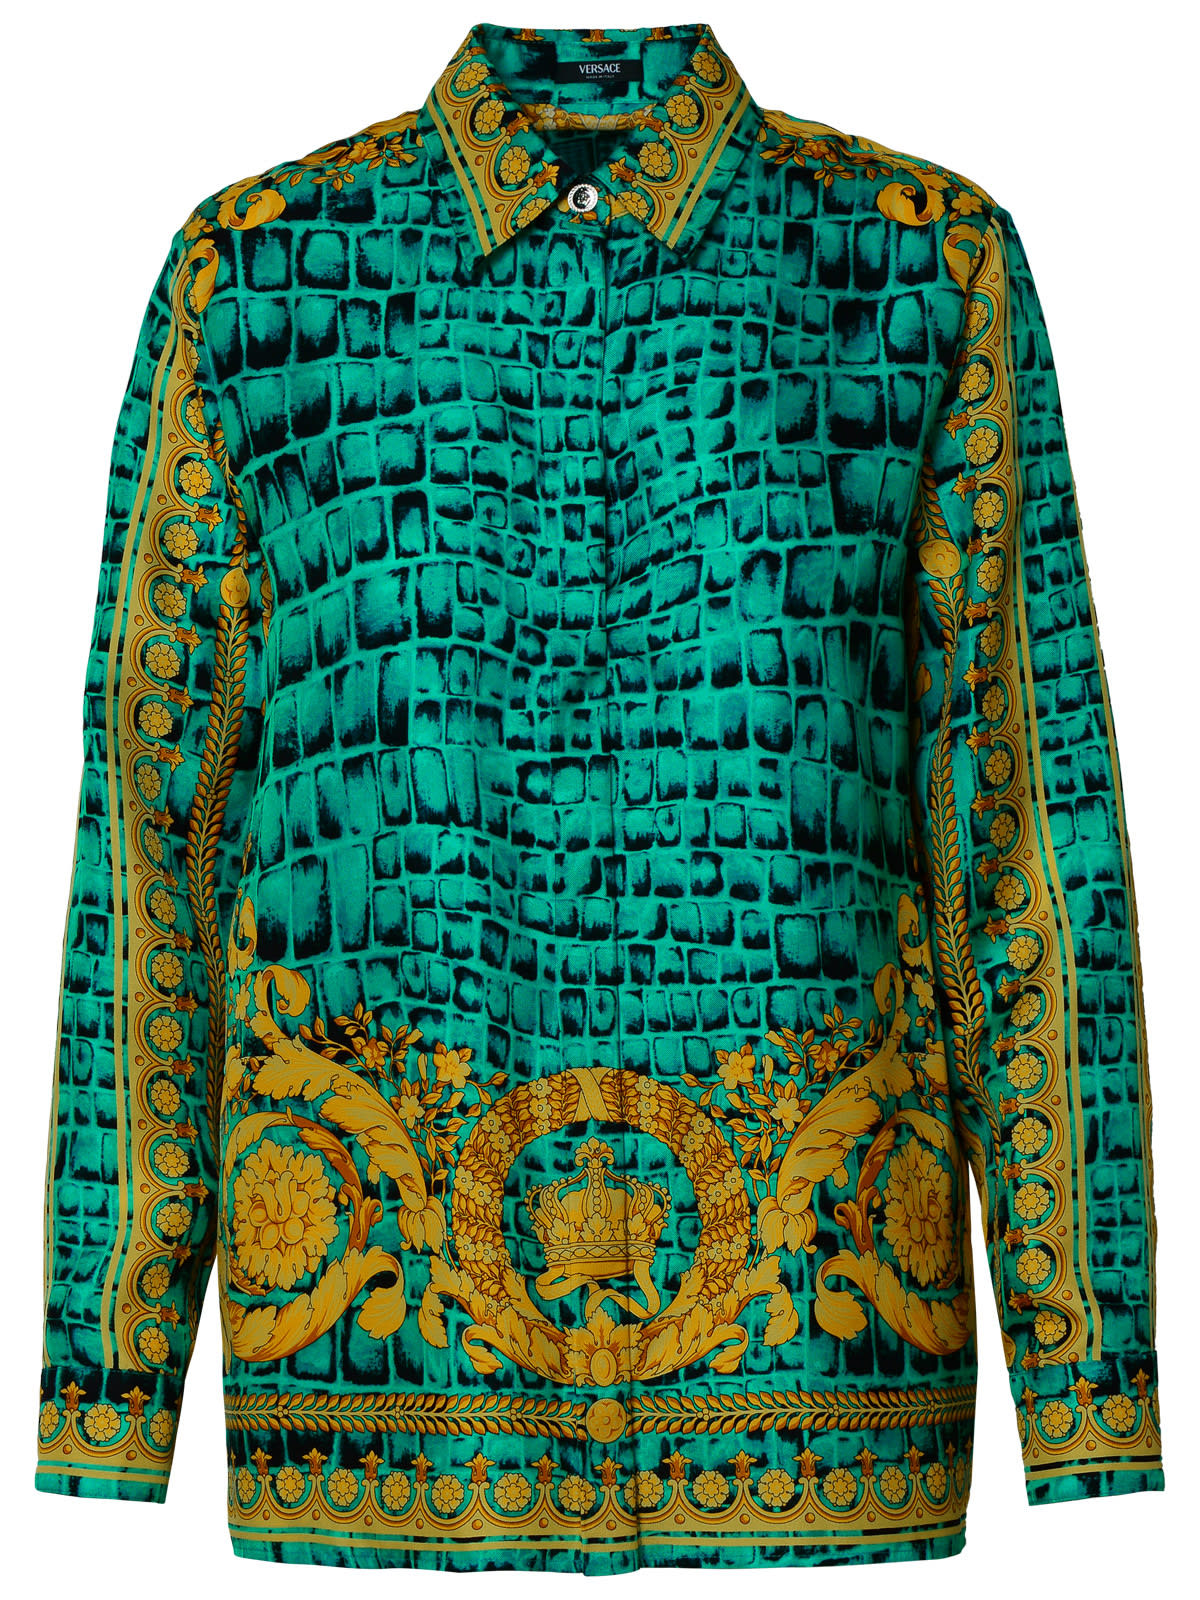 baroccodile Multicolored Silk Shirt